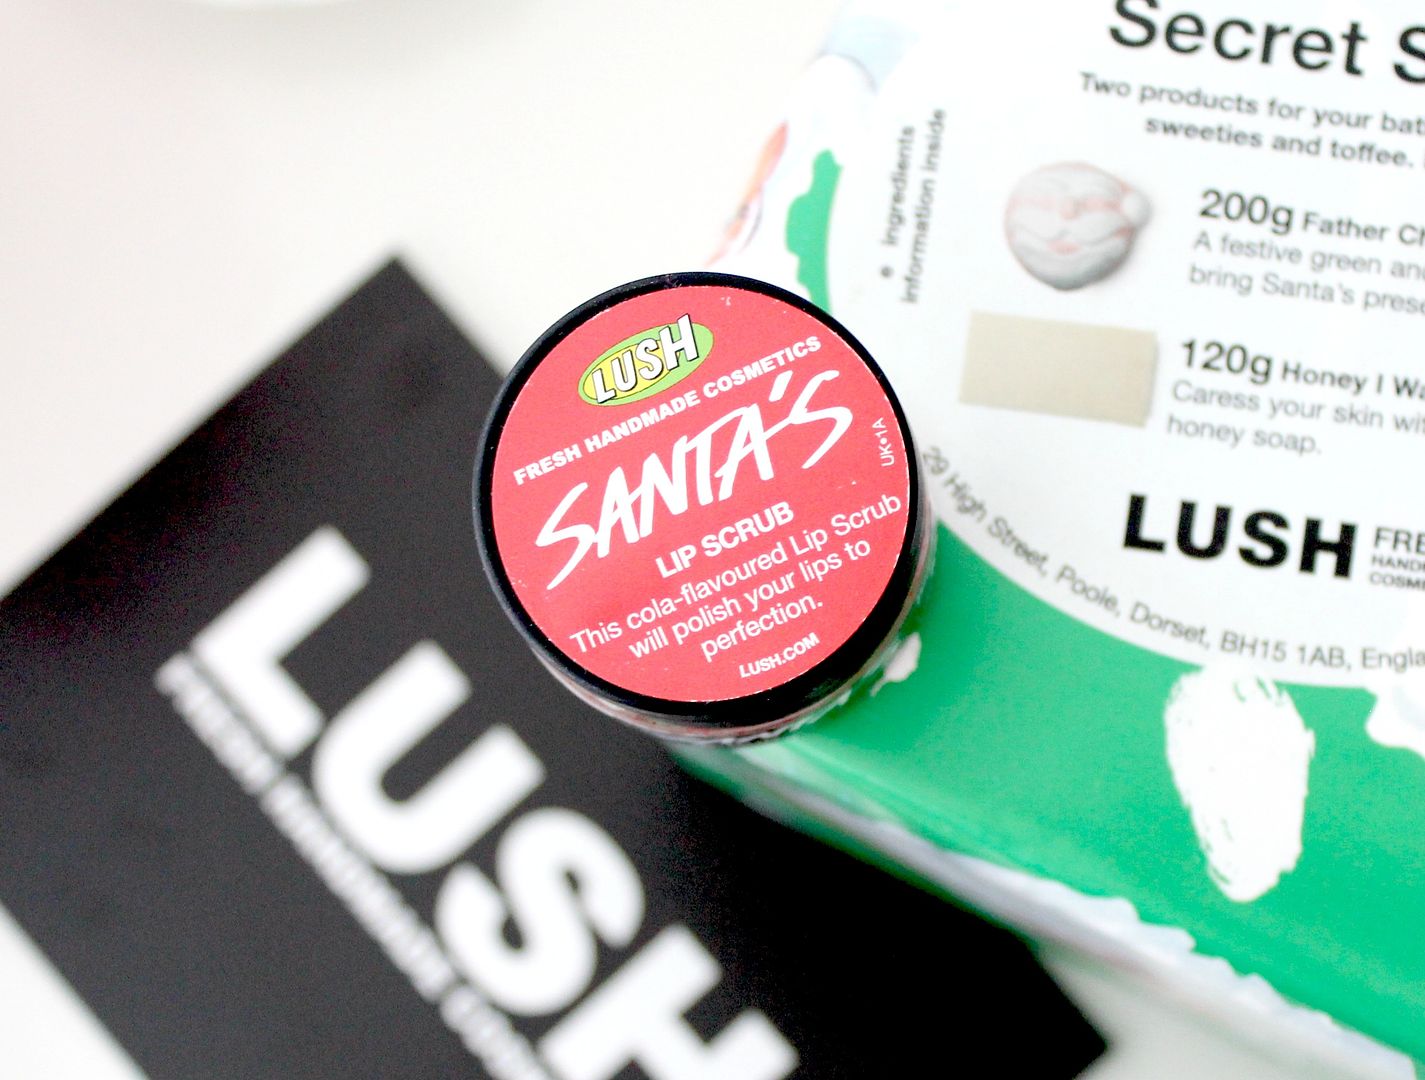 LUSH Christmas Gift Sets, LUSH Christmas Gifts, Lush Secret Santa, LUSH Santa's Lip Scrub, LUSH Lip Scrub